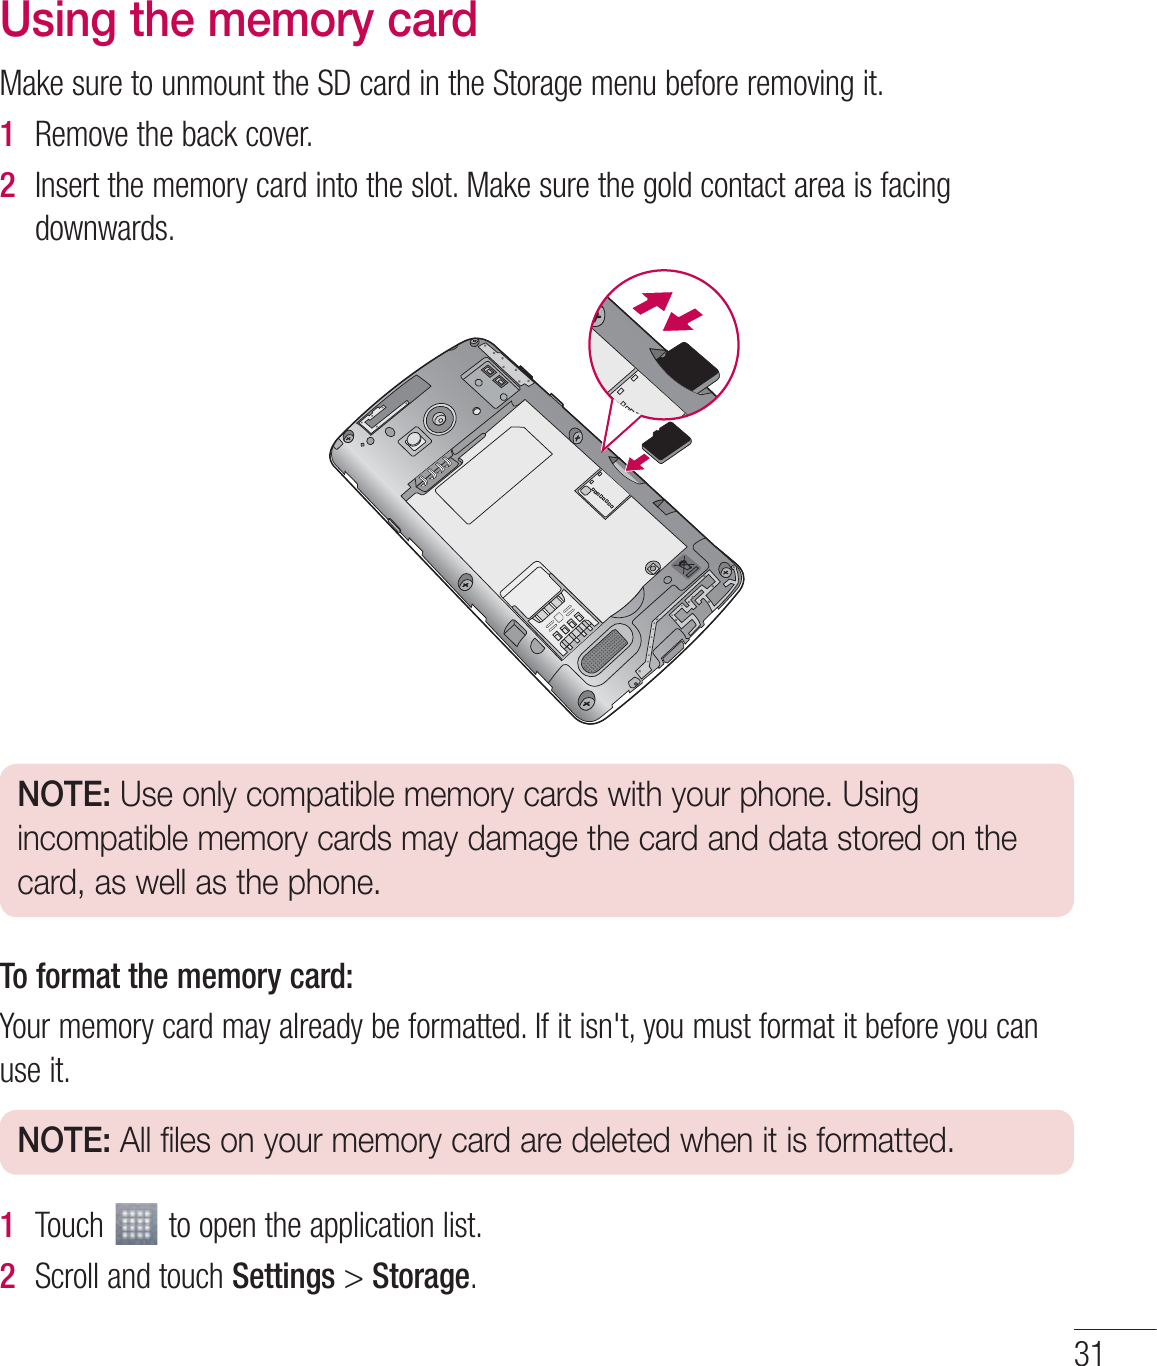 31Using the memory card.BLFTVSFUPVONPVOUUIF4%DBSEJOUIF4UPSBHFNFOVCFGPSFSFNPWJOHJU1  3FNPWFUIFCBDLDPWFS2  *OTFSUUIFNFNPSZDBSEJOUPUIFTMPU.BLFTVSFUIFHPMEDPOUBDUBSFBJTGBDJOHEPXOXBSETNOTE: Use only compatible memory cards with your phone. Using incompatible memory cards may damage the card and data stored on the card, as well as the phone.To format the memory card::PVSNFNPSZDBSENBZBMSFBEZCFGPSNBUUFE*GJUJTOhUZPVNVTUGPSNBUJUCFGPSFZPVDBOVTFJUNOTE: All files on your memory card are deleted when it is formatted.1  5PVDI UPPQFOUIFBQQMJDBUJPOMJTU2  4DSPMMBOEUPVDISettingsStorage